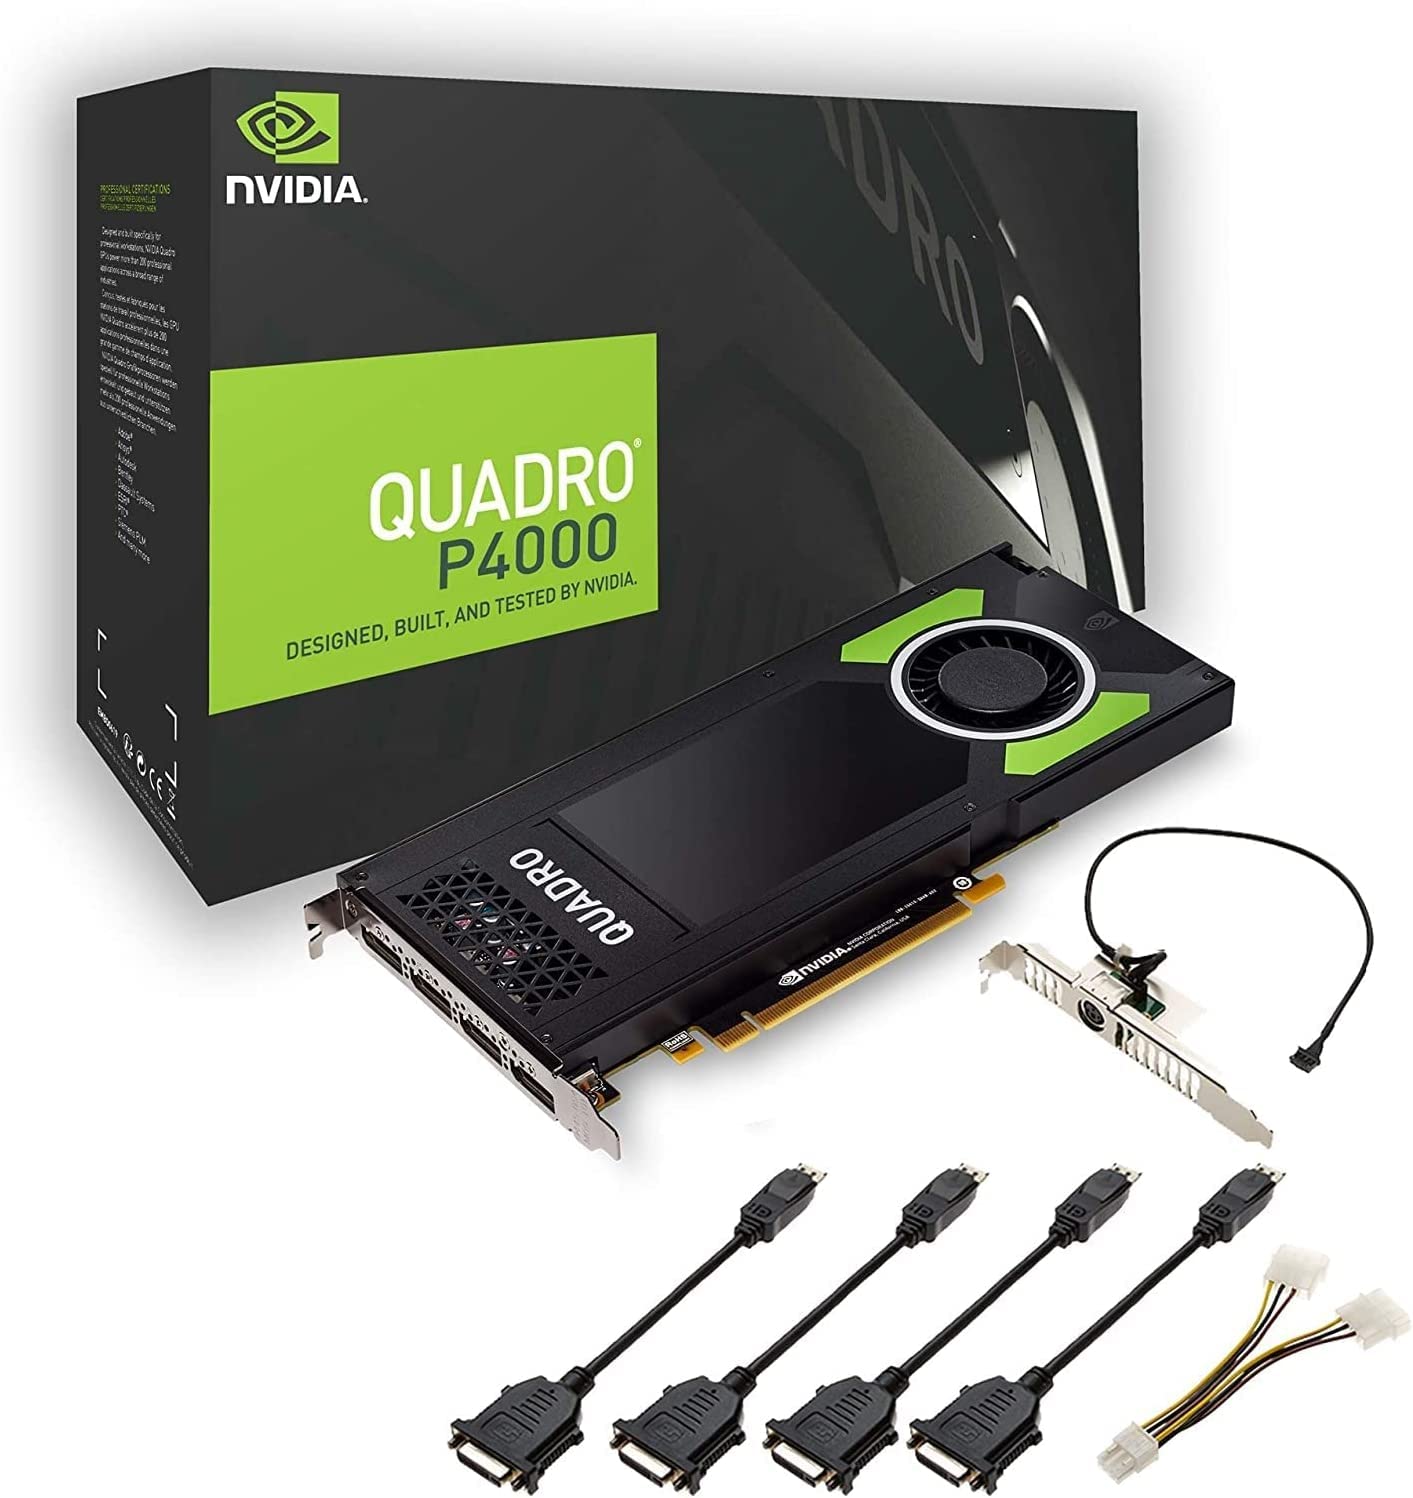 HP NVIDIA Quadro P4000 Professional Graphic Card 8GB GDDR5 PCI Express